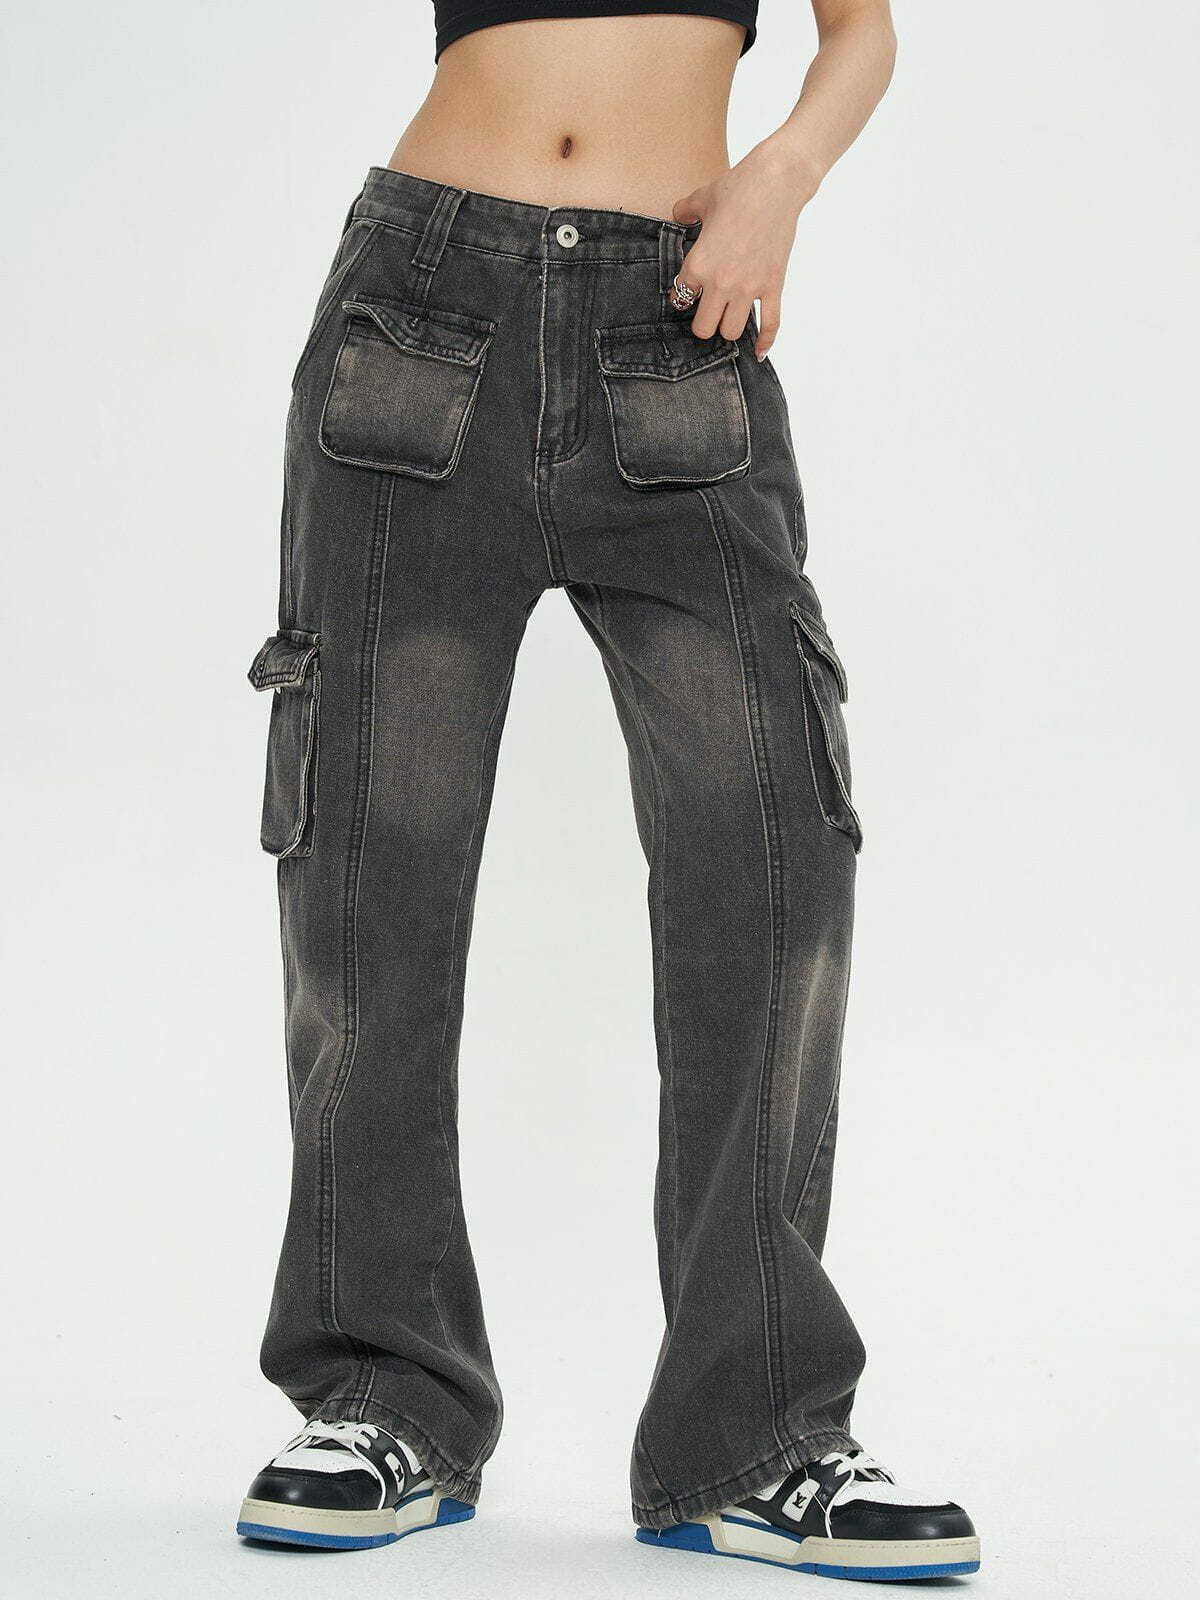 multipocket vintage jeans edgy & retro streetwear 6040